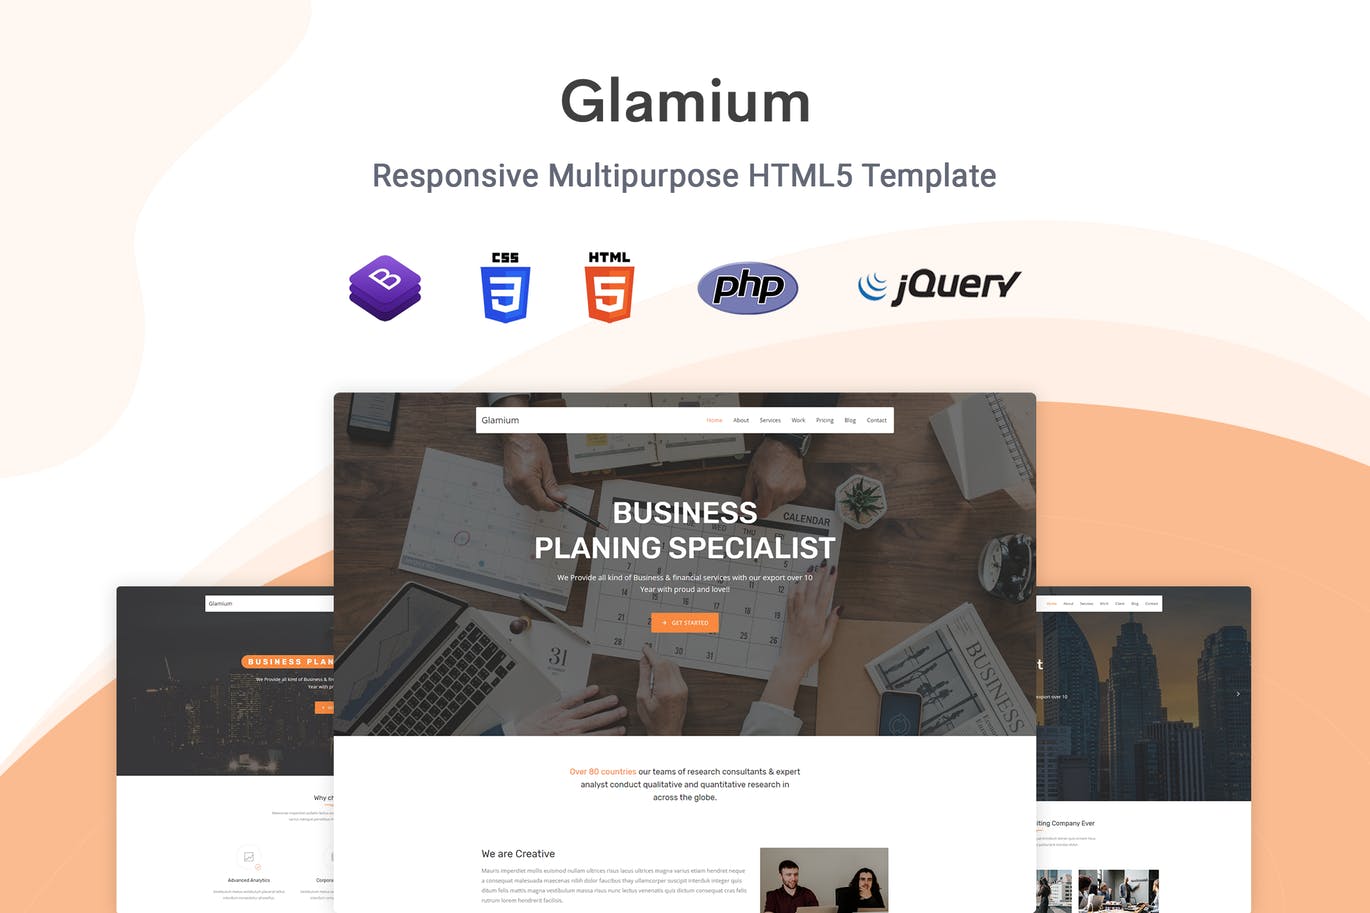 创意单页响应式设计HTML5模板第一素材精选 Glamium – Responsive Multipurpose HTML5 Template插图